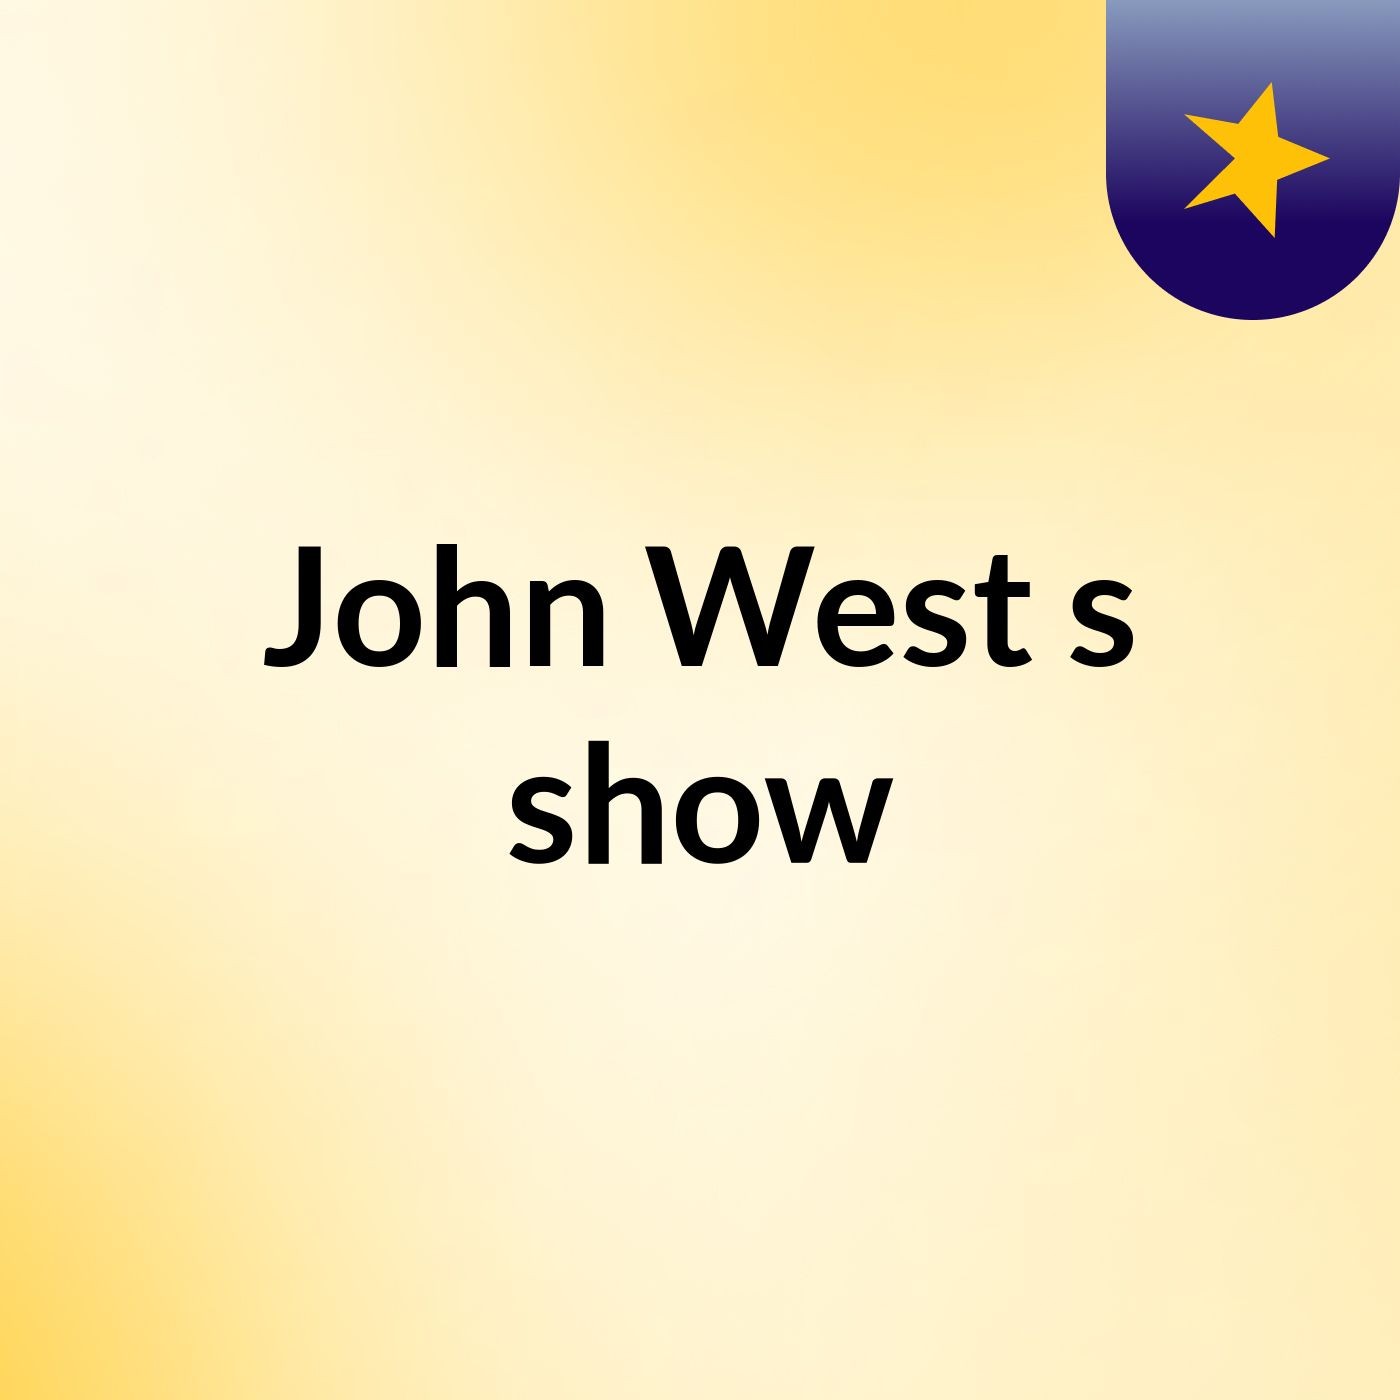 John West's show